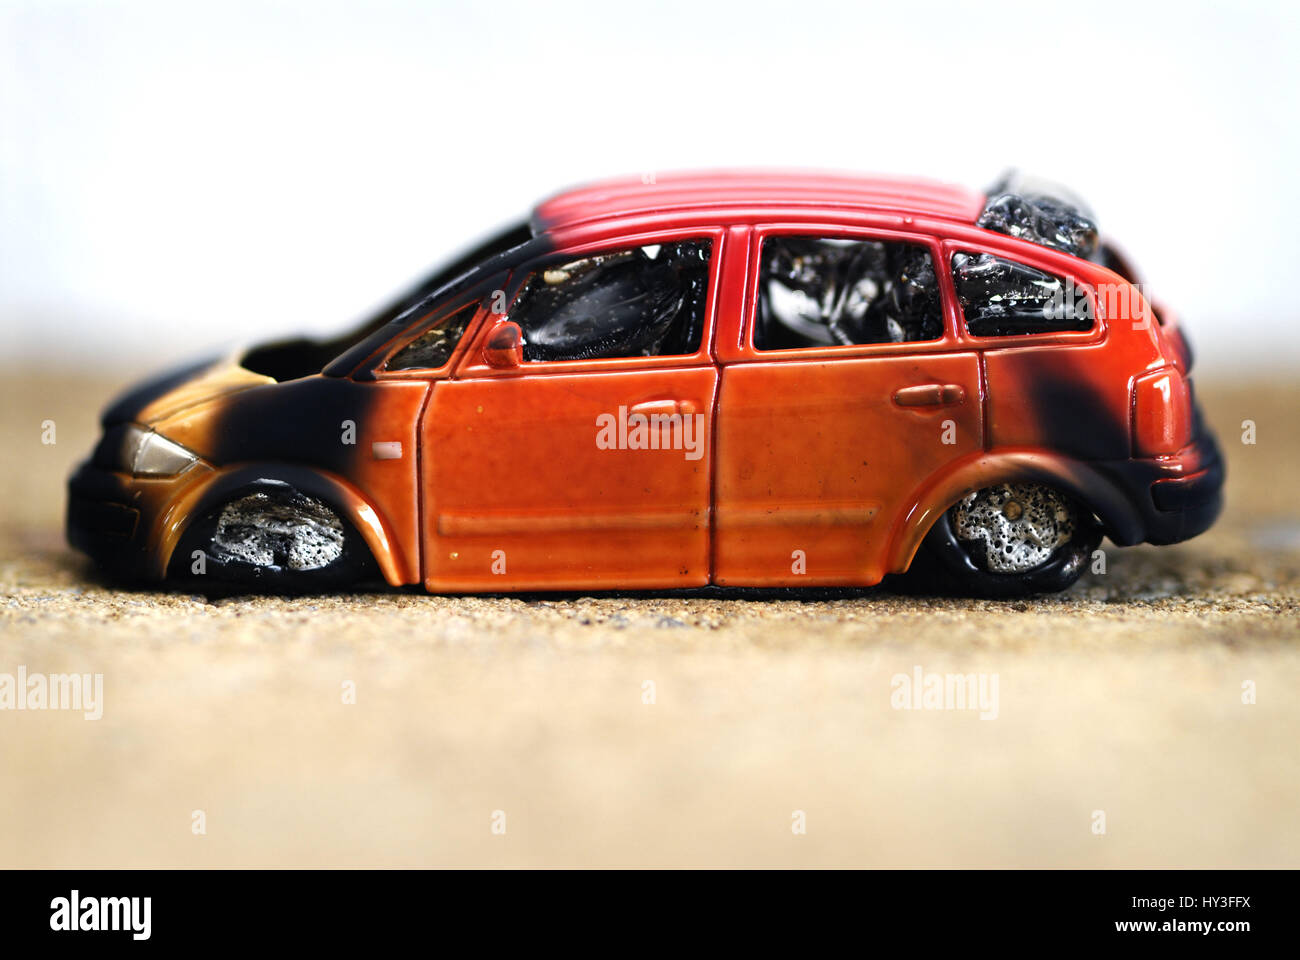 Verbrantes miniature car, Verbrantes Miniaturauto Stock Photo